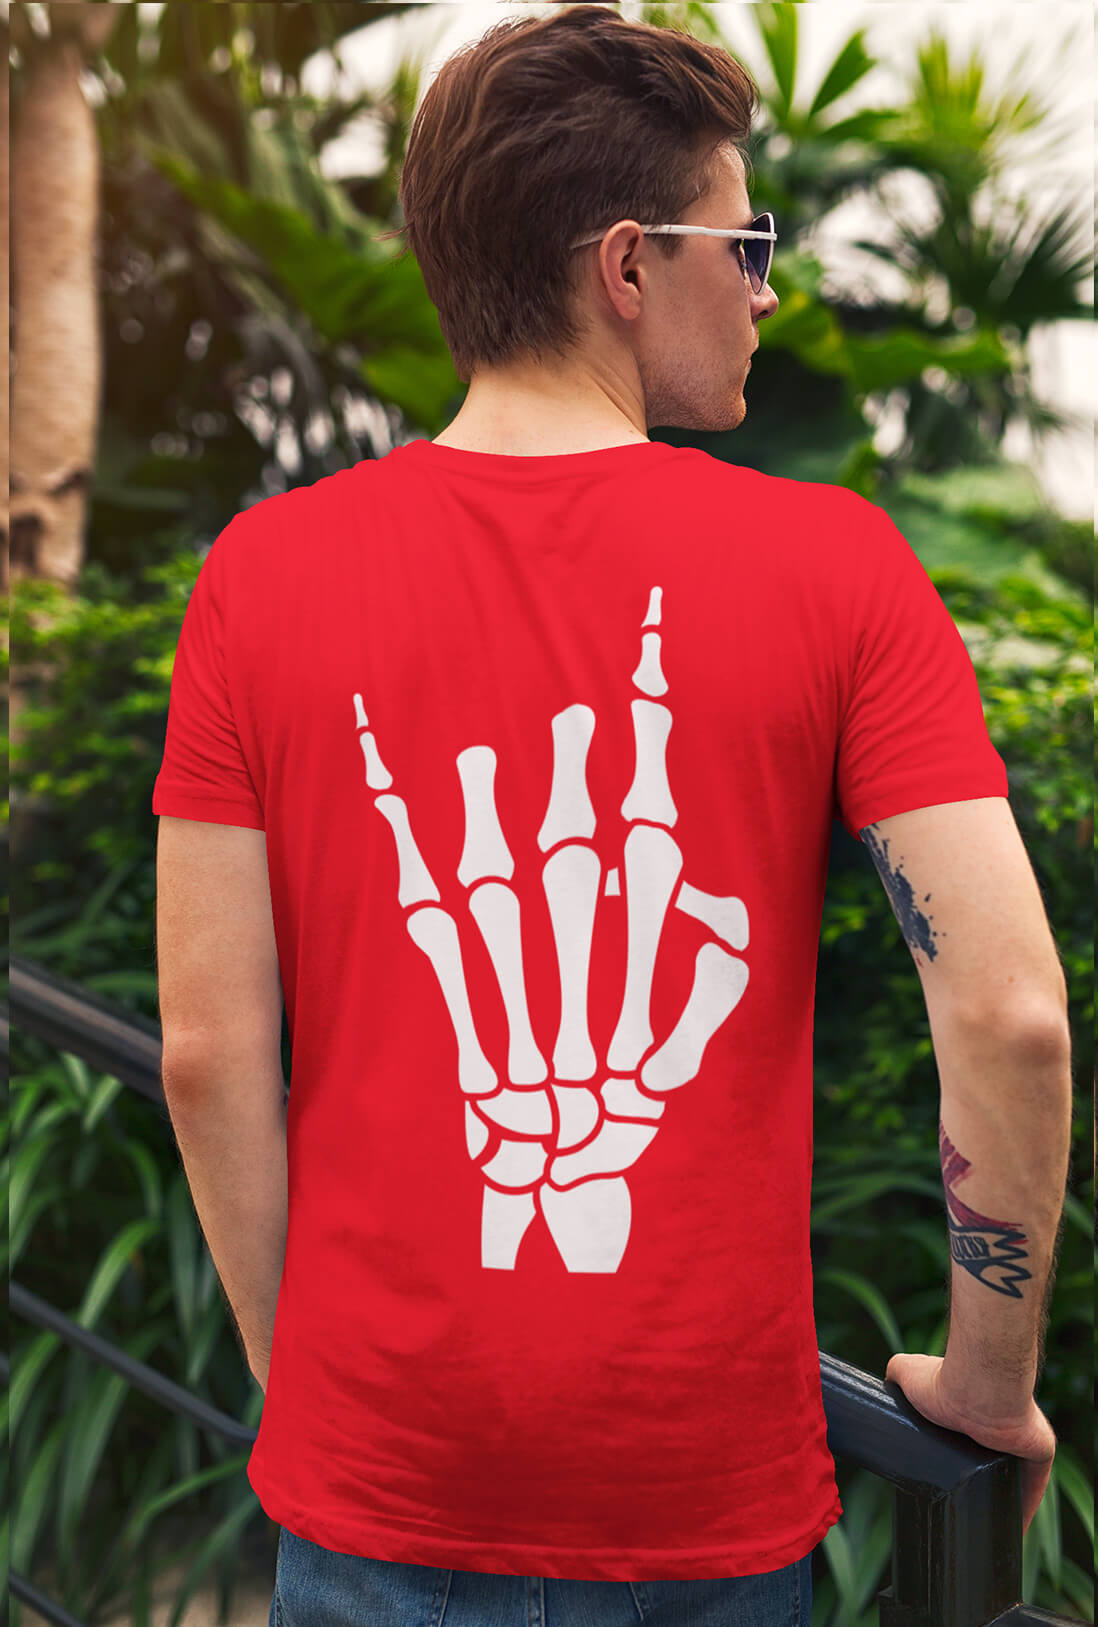 Skeleton Men's Back Printed T-Shirt